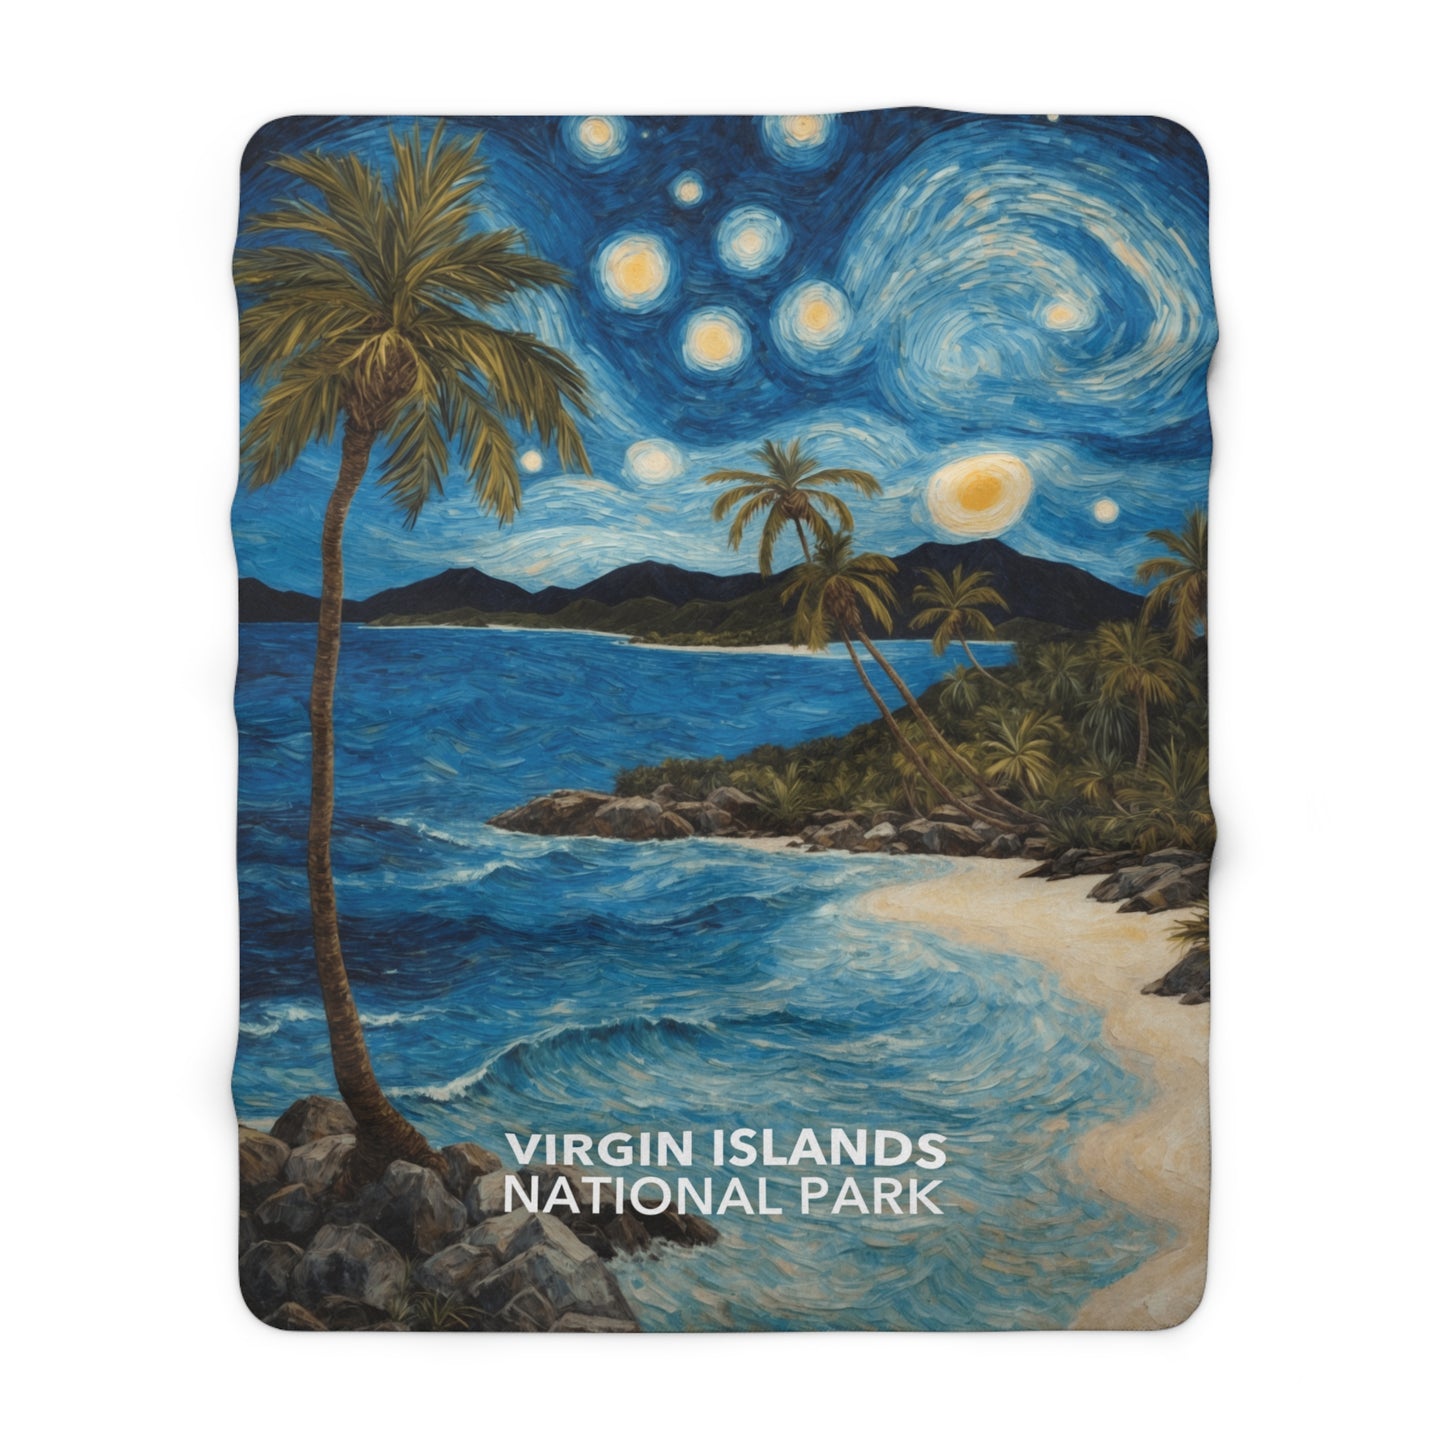 Virgin Islands National Park Sherpa Blanket - The Starry Night